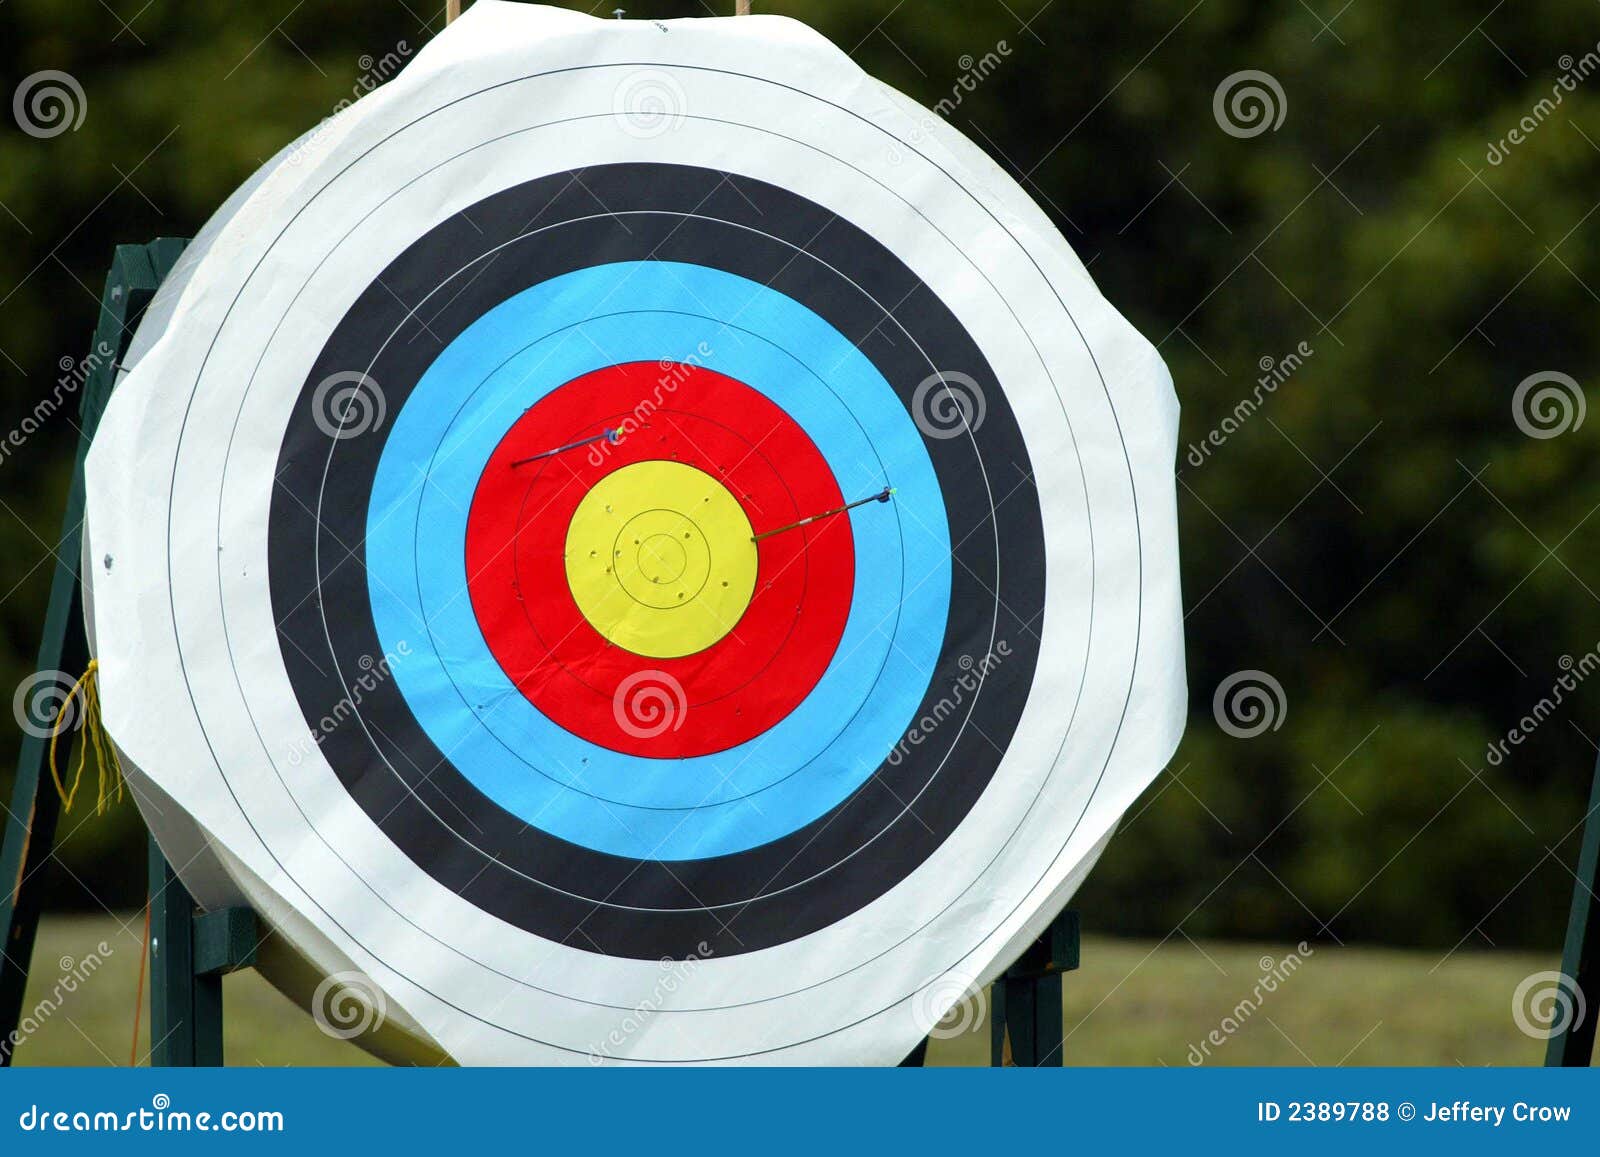 archery target 53